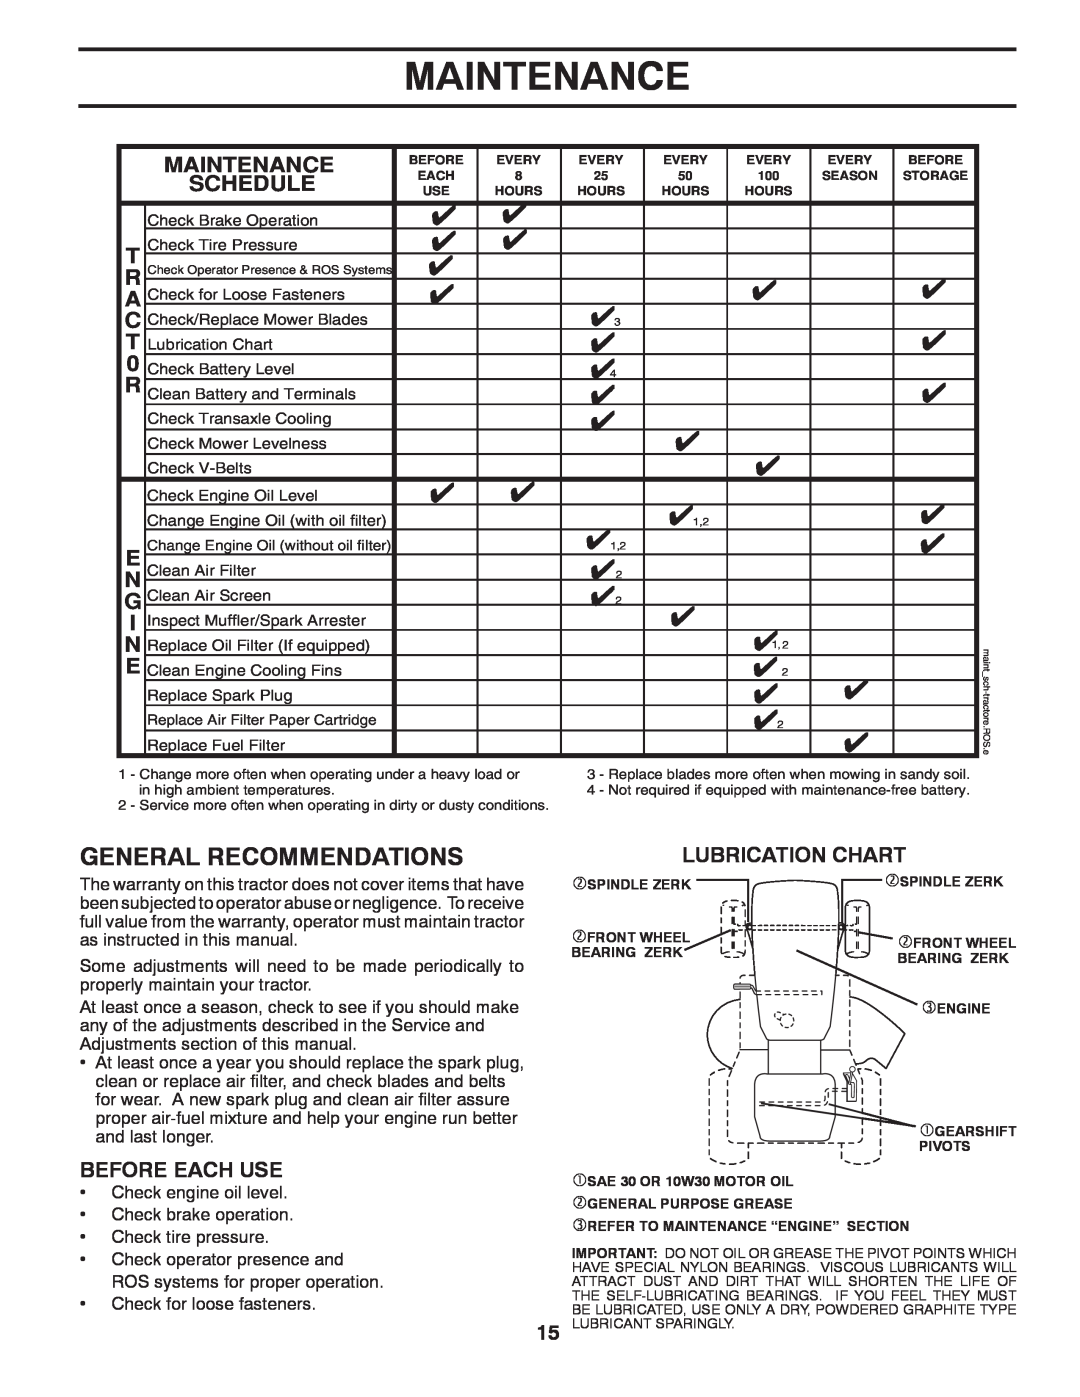 McCulloch 422800 manual Maintenance, Lubrication Chart 